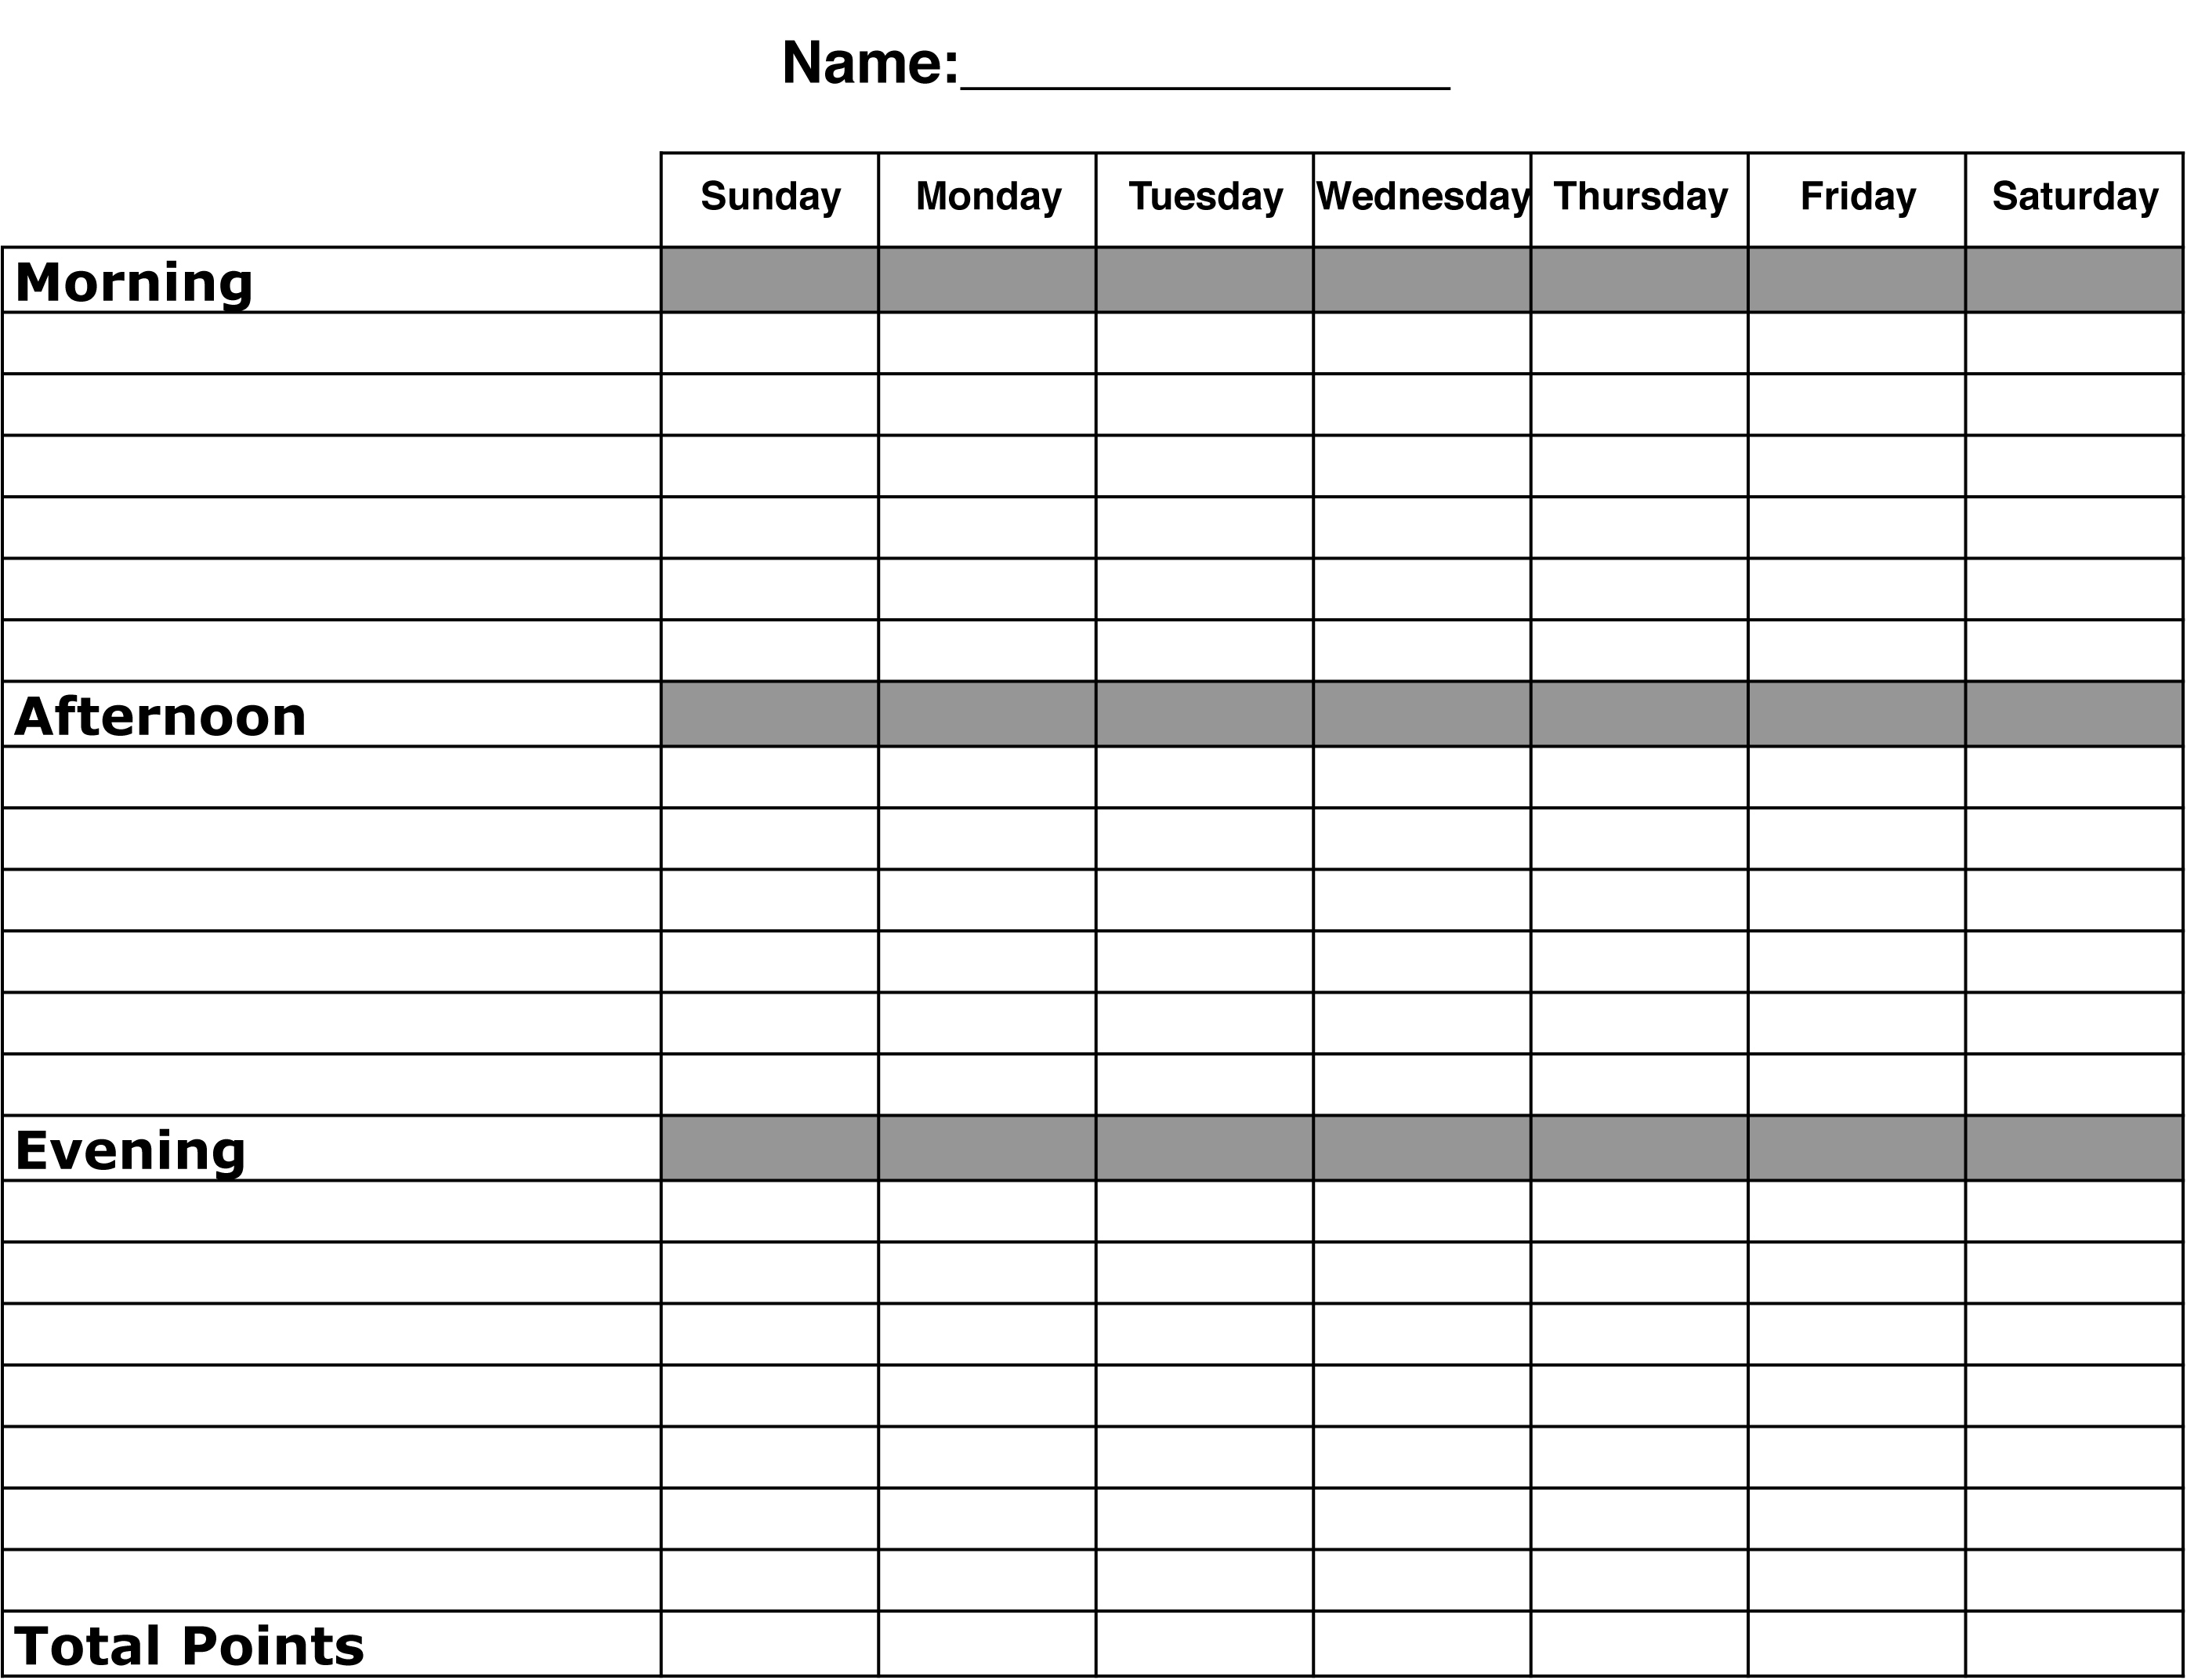 Blank Chore Chart Template Free